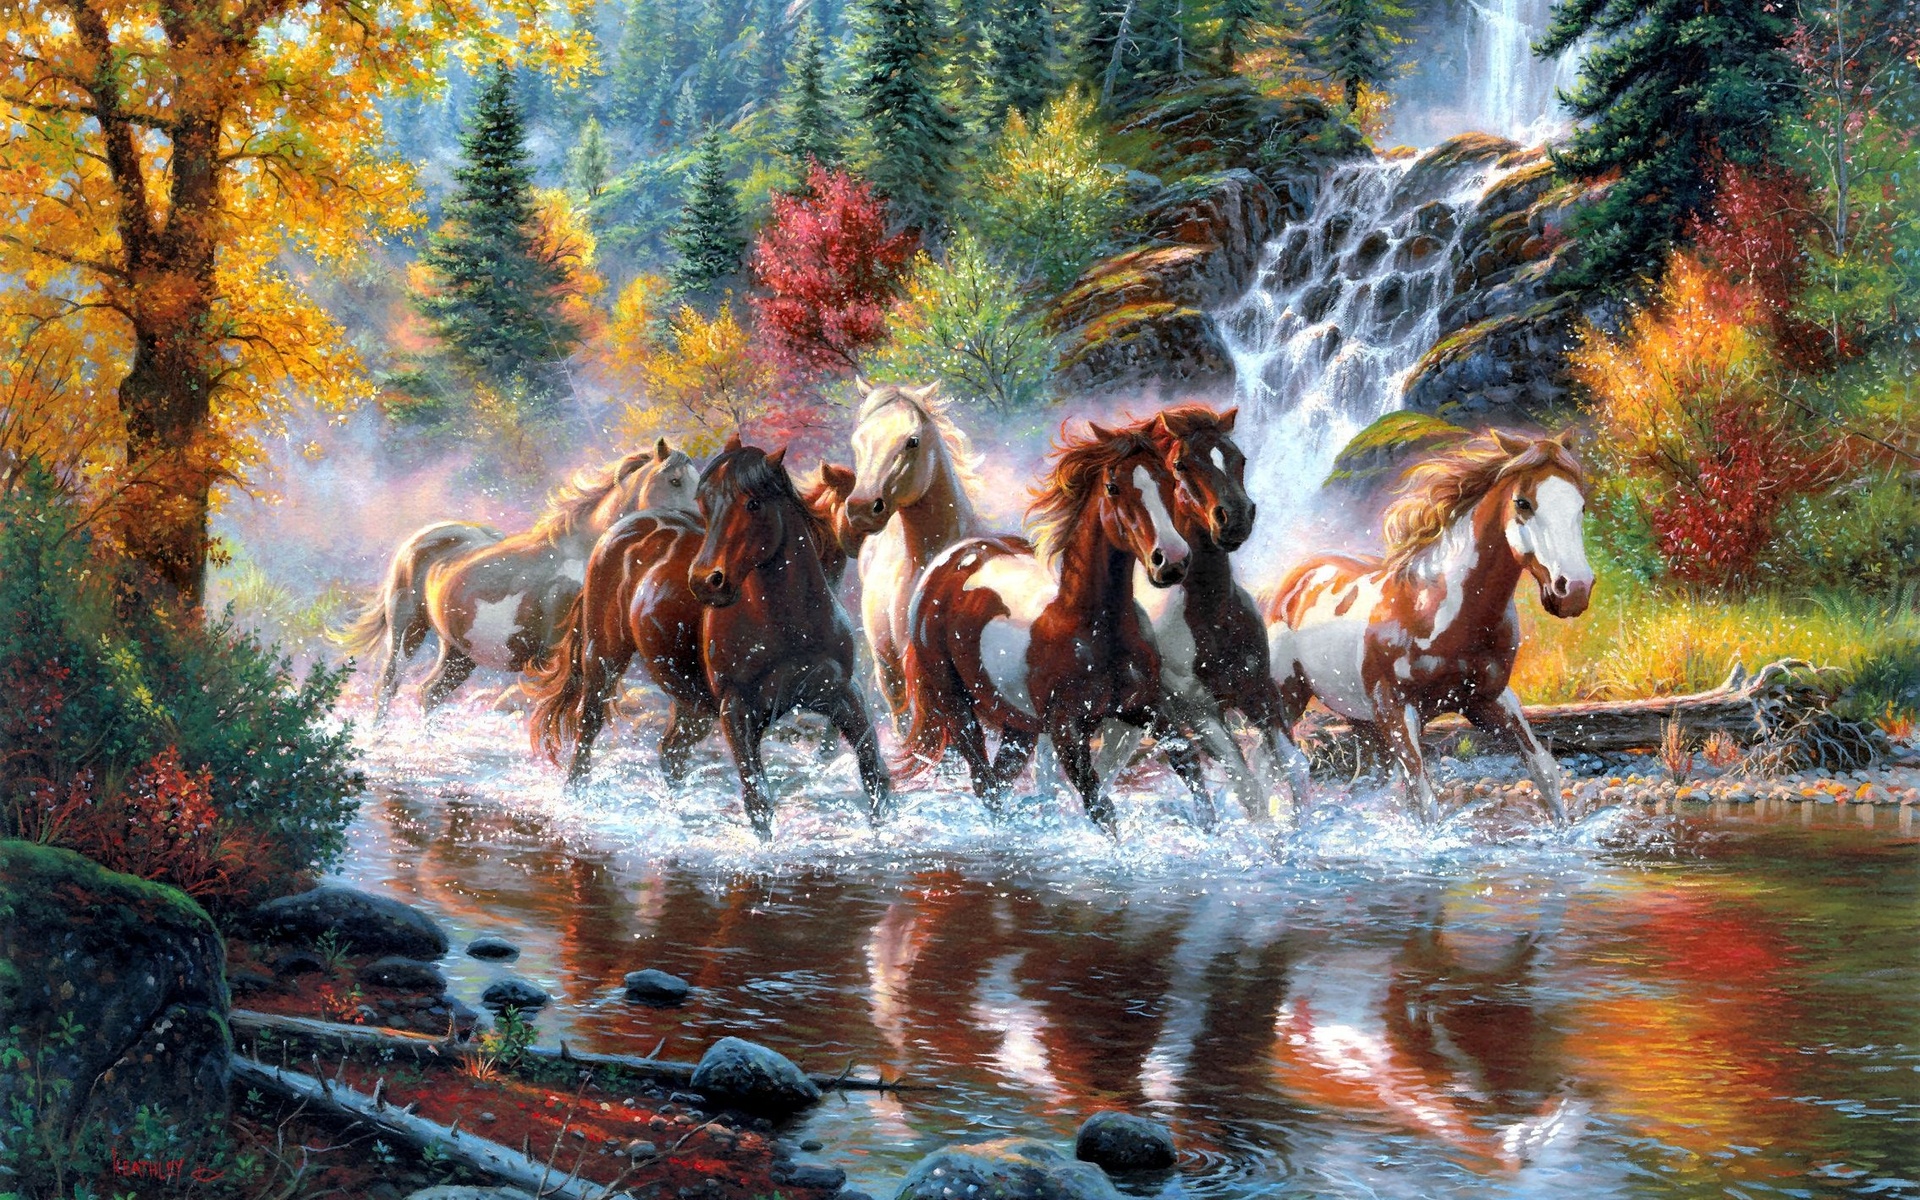 mark, Keathley, Mark keathley, Horses, Paintings, Landscapes, Nature, Trees, Forest, Waterfall, Autumn, Fall, Colors, Rivers, Artistic, Art Wallpaper